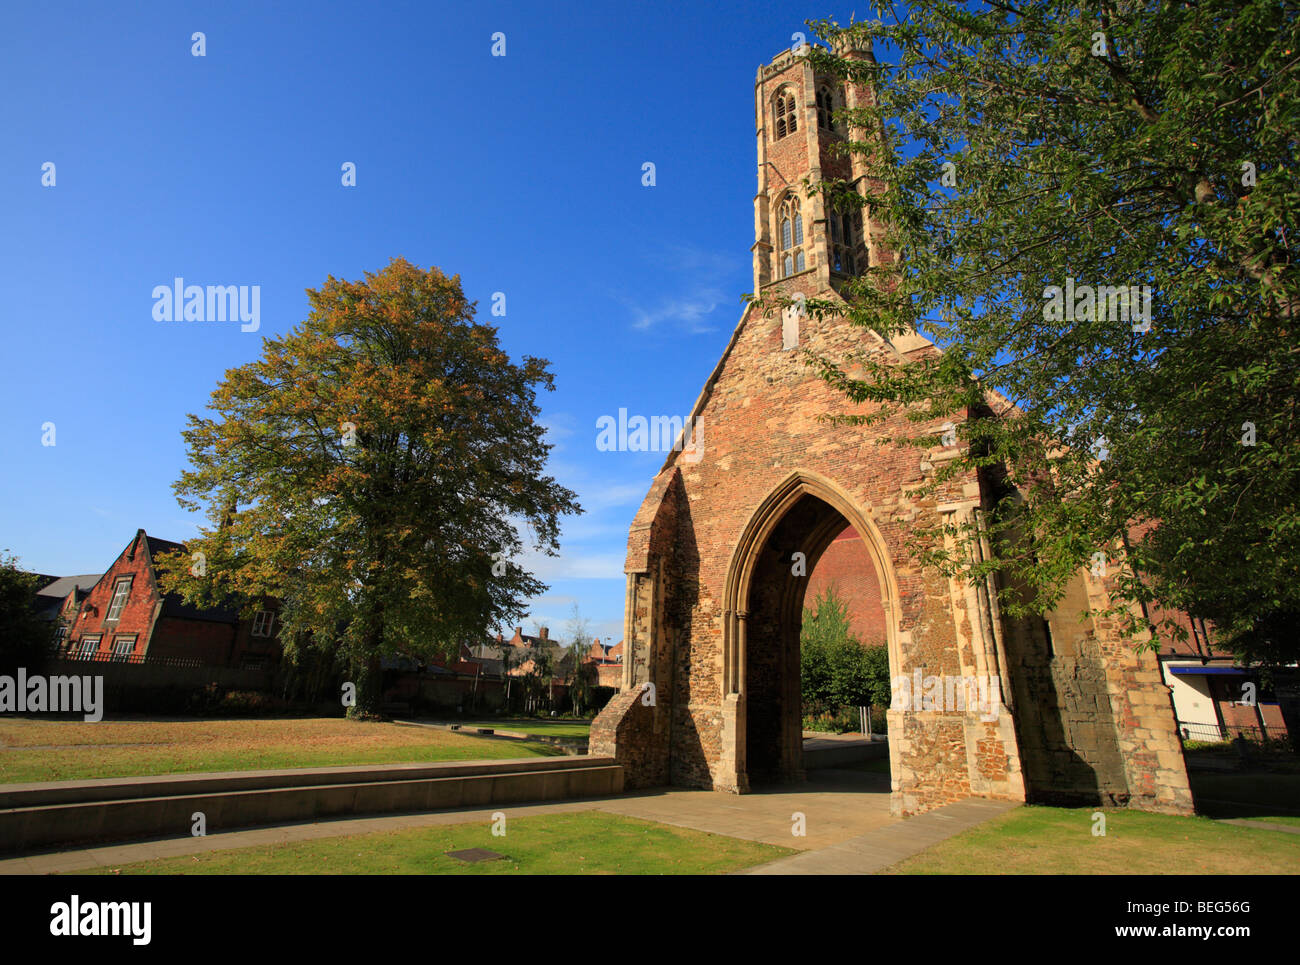 Greyfriars tower in King's Lynn, Norfolk. Stock Photo